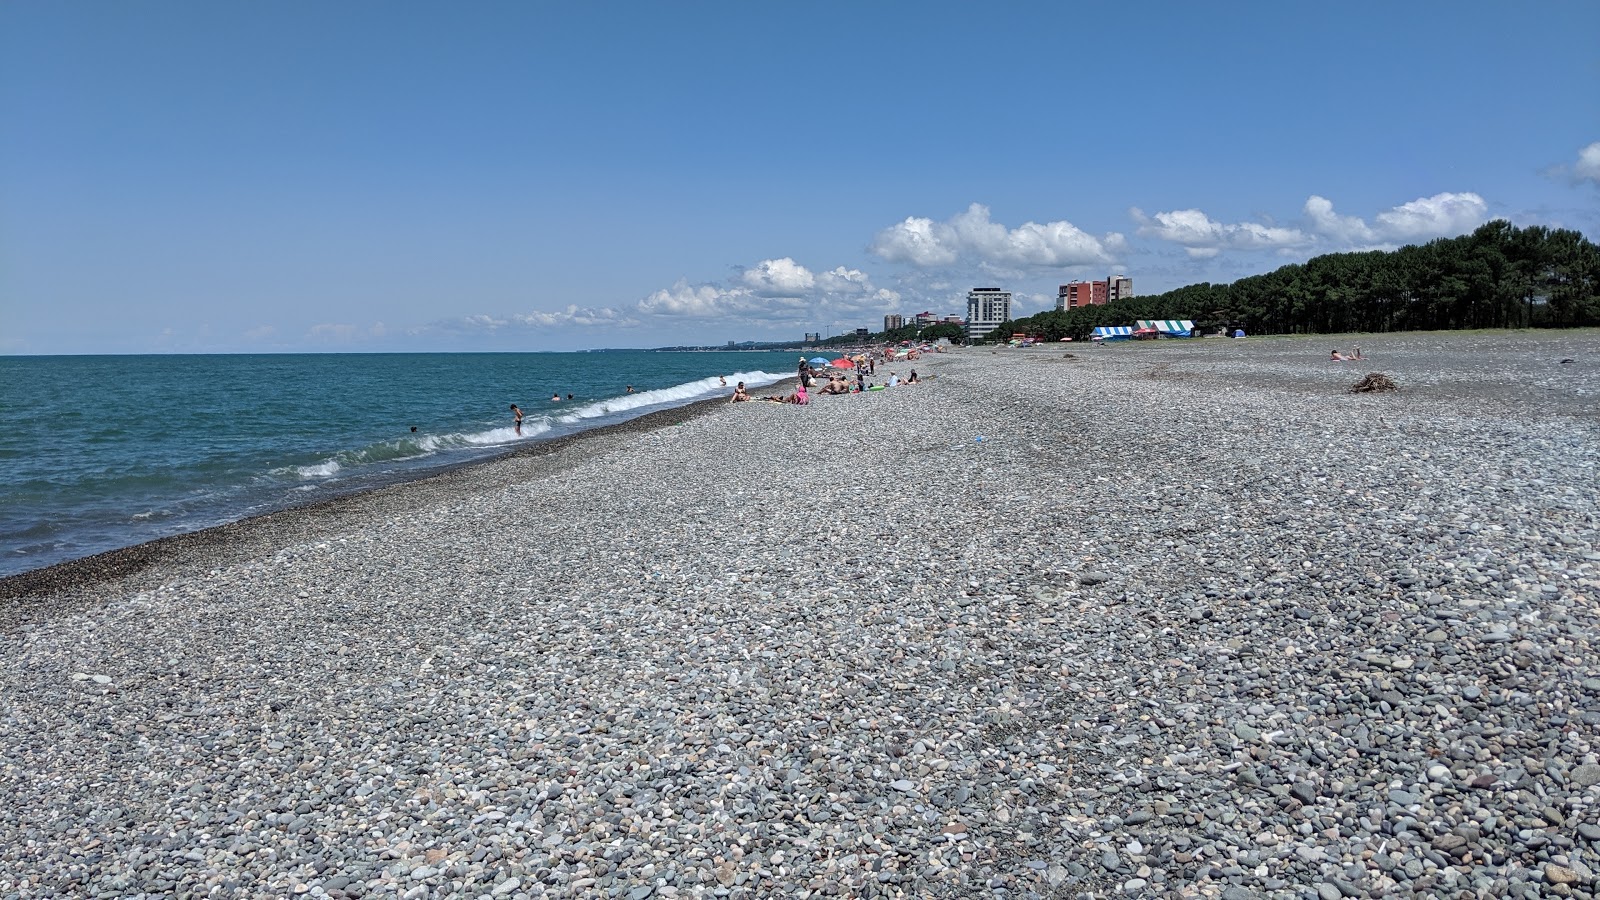 Photo of Kobuleti beach with gray pebble surface